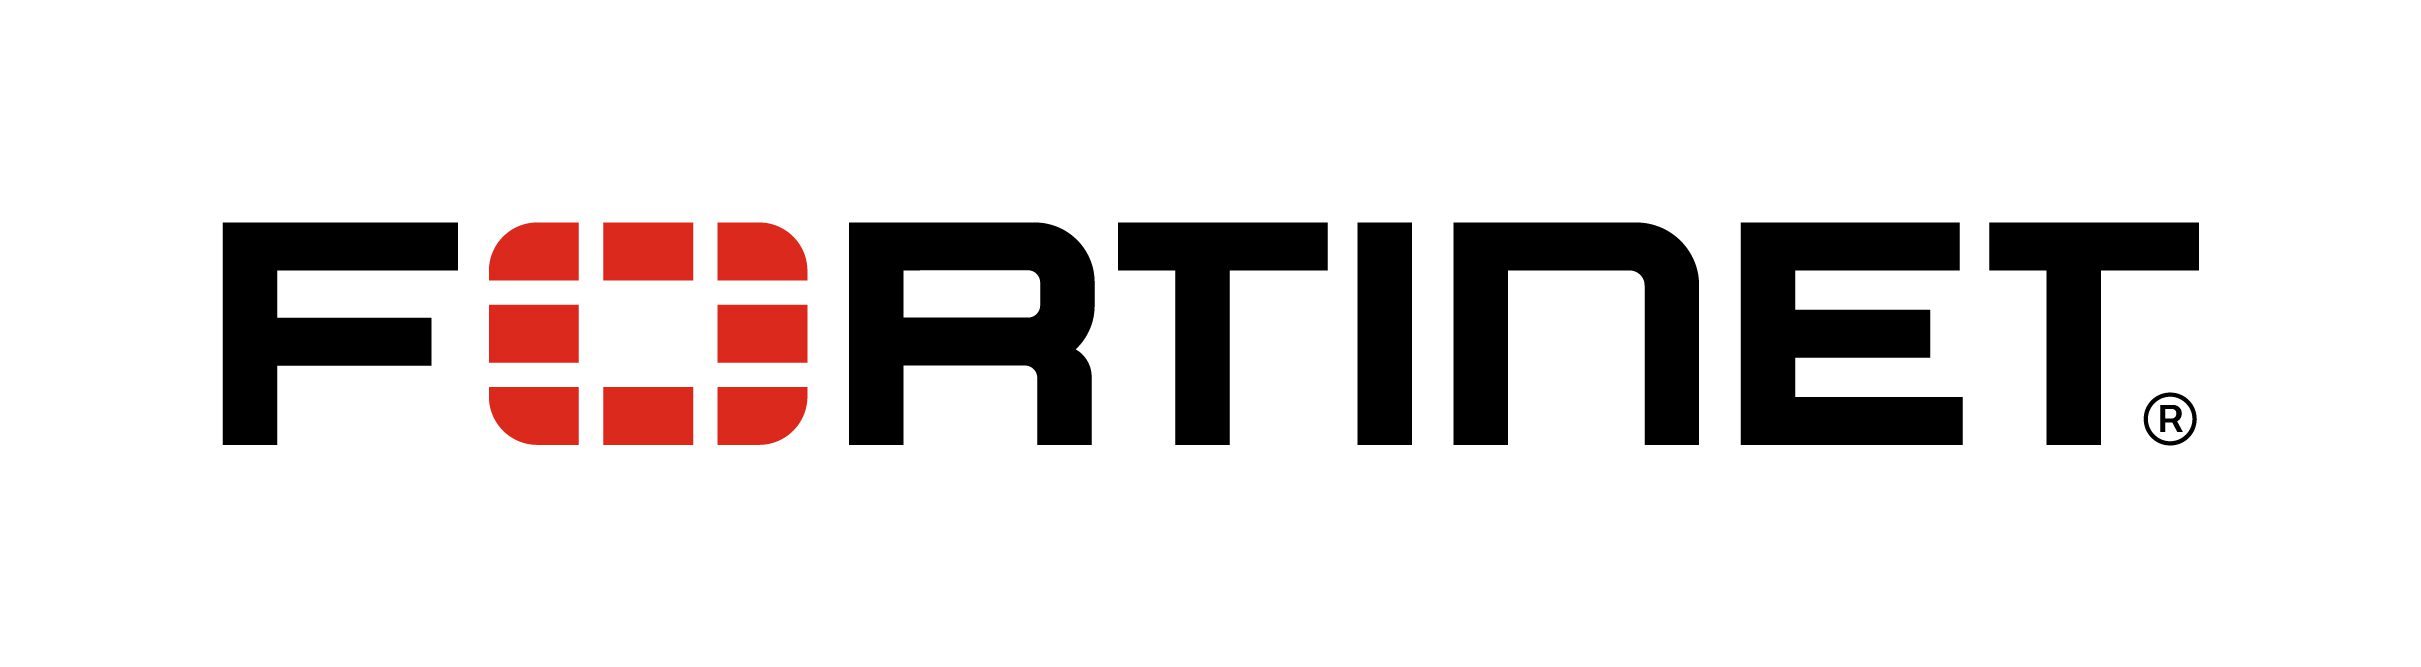 Fortinet-logo-rgb-black-red